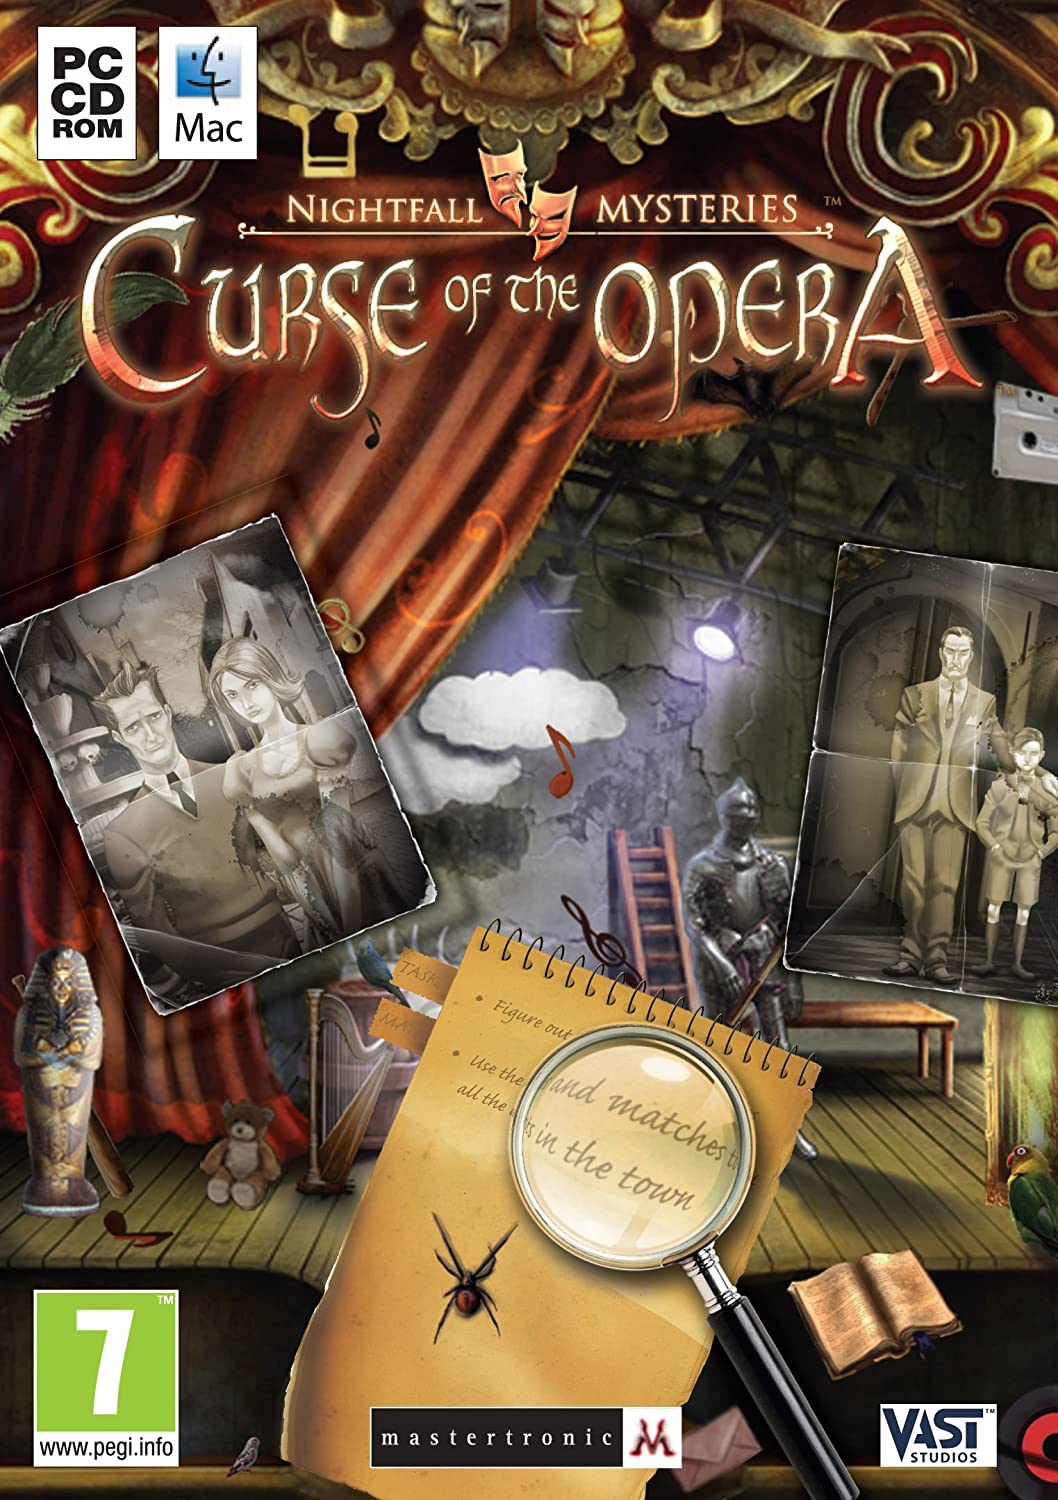 Nightfall Mysteries: Curse Of The Opera (PC CD)